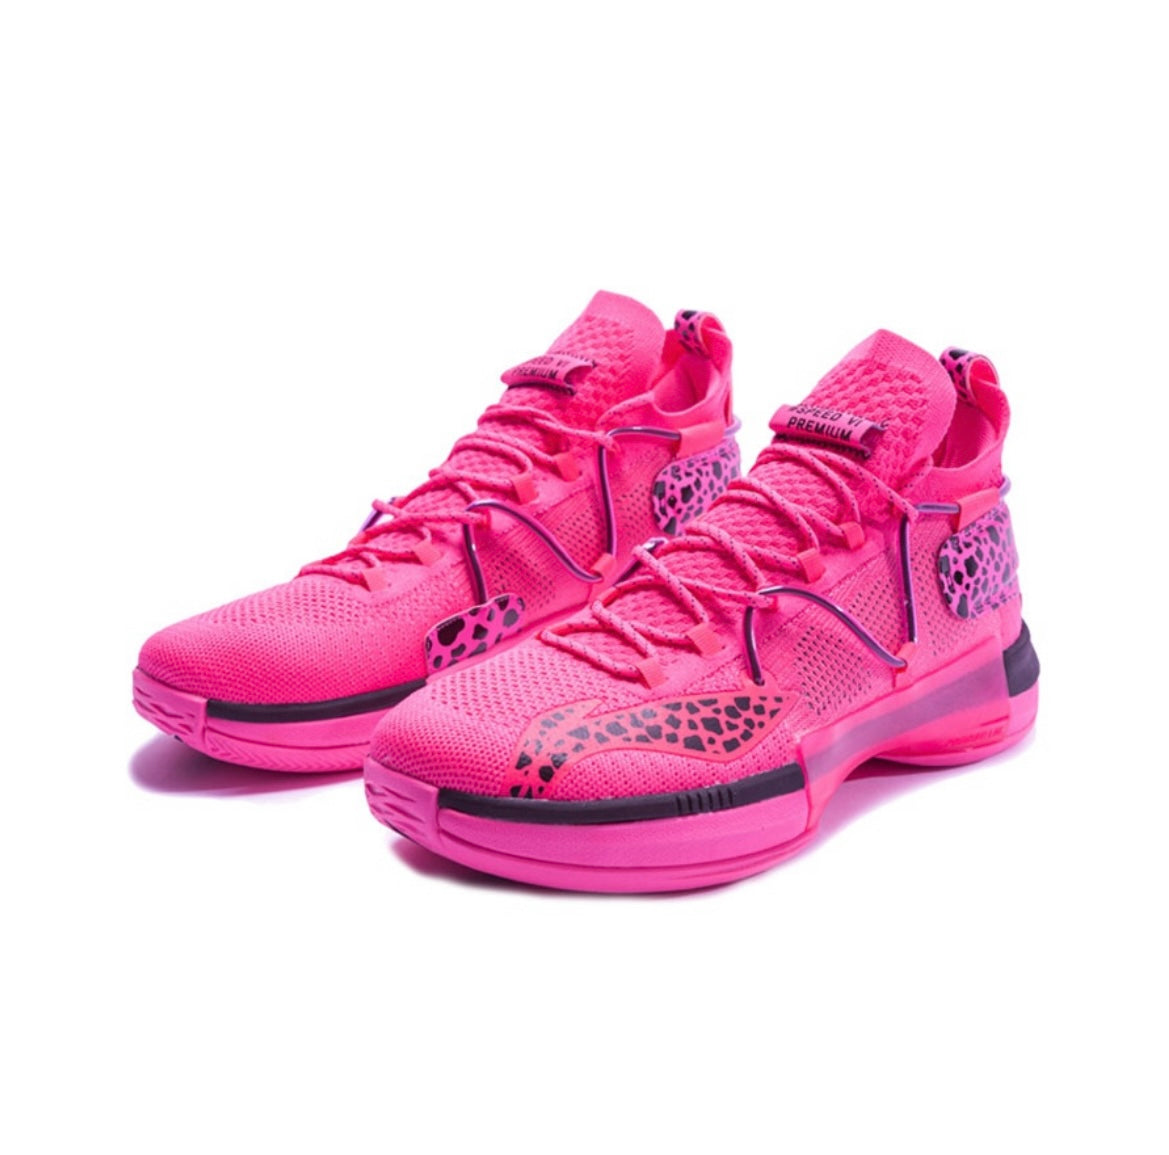 CJ•McCollum x Li-Ning Speed 6 Premium - Pink Panther